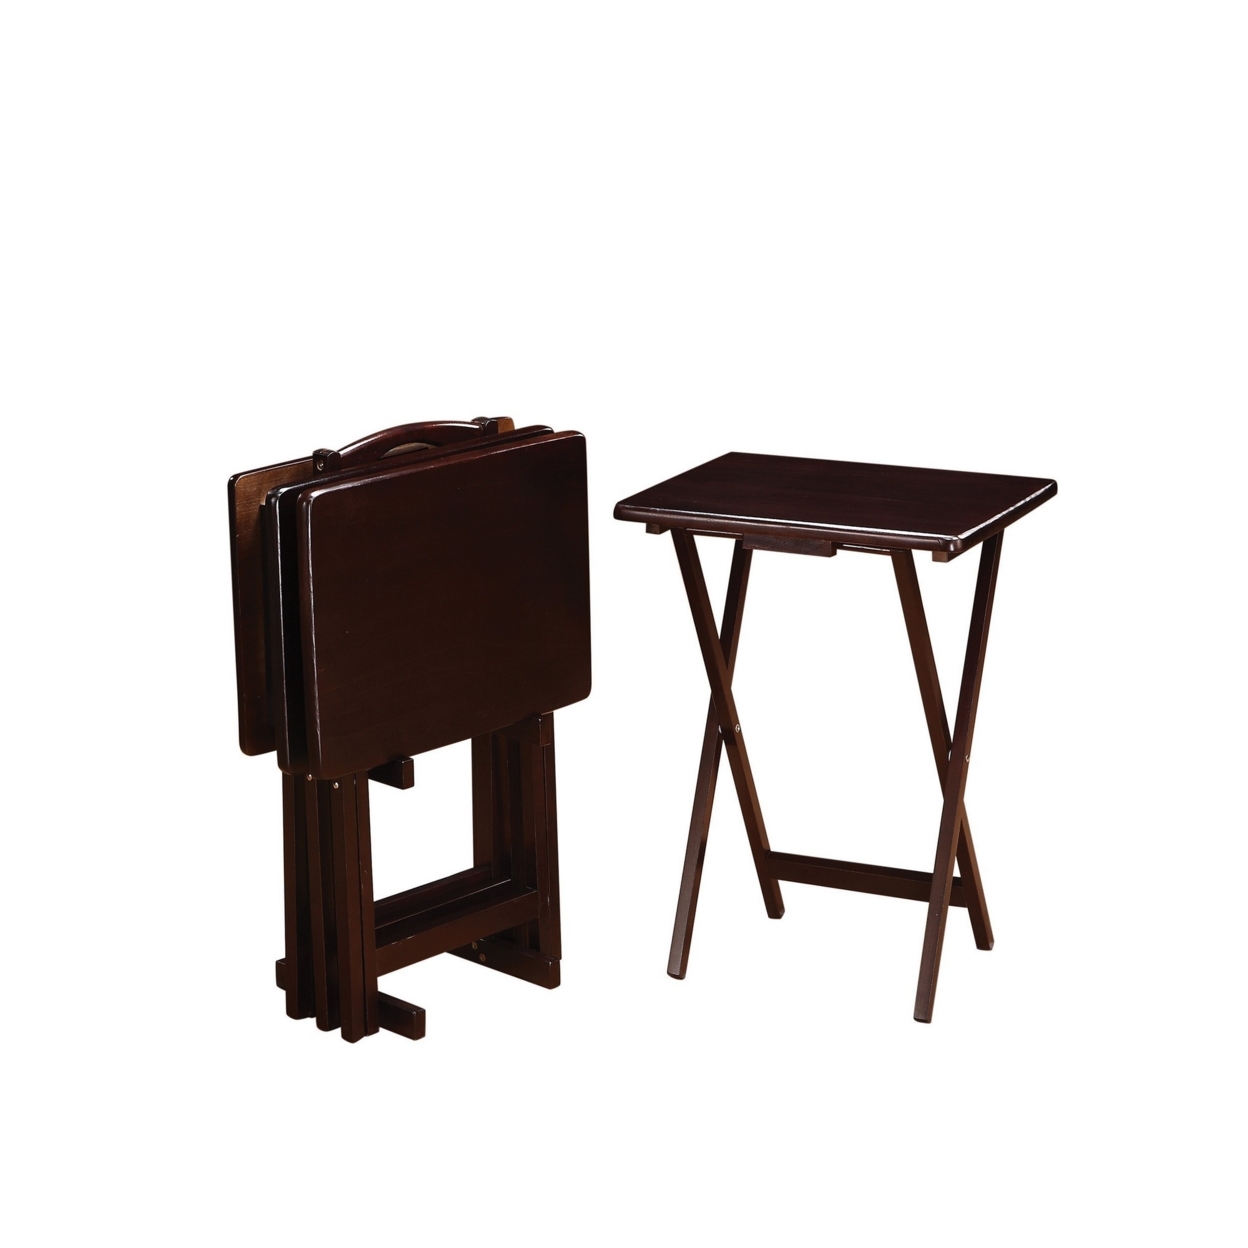 5 Piece Rectangular Wooden Tray Table Set, Brown- Saltoro Sherpi